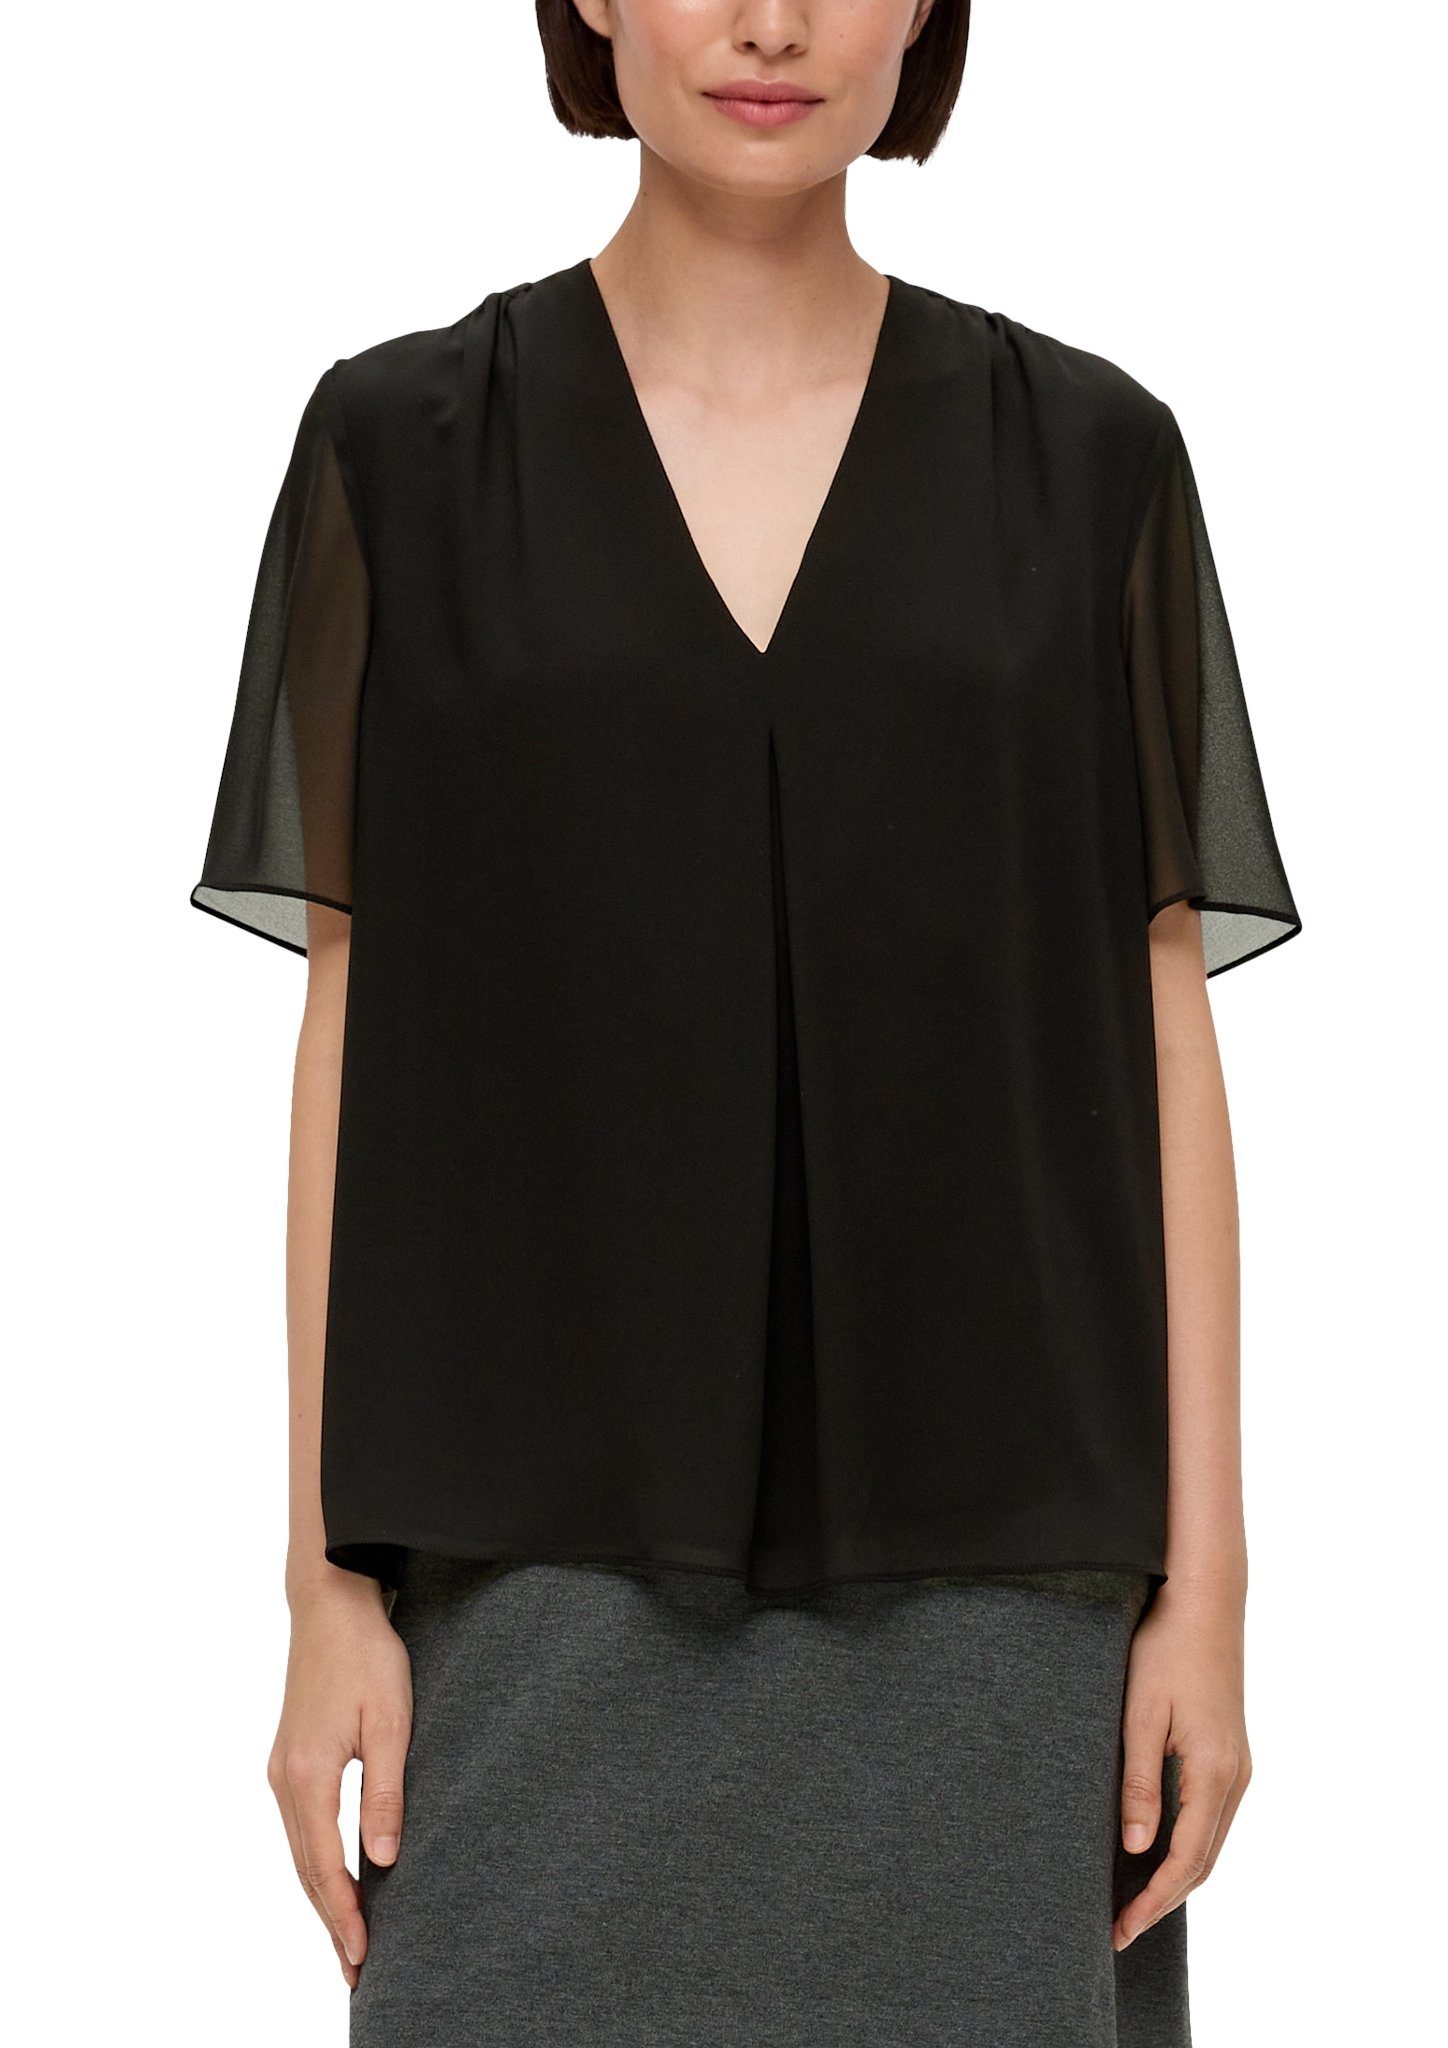 s.Oliver BLACK LABEL Shirtbluse mit eingelegter Falte vorne GREY/BLACK